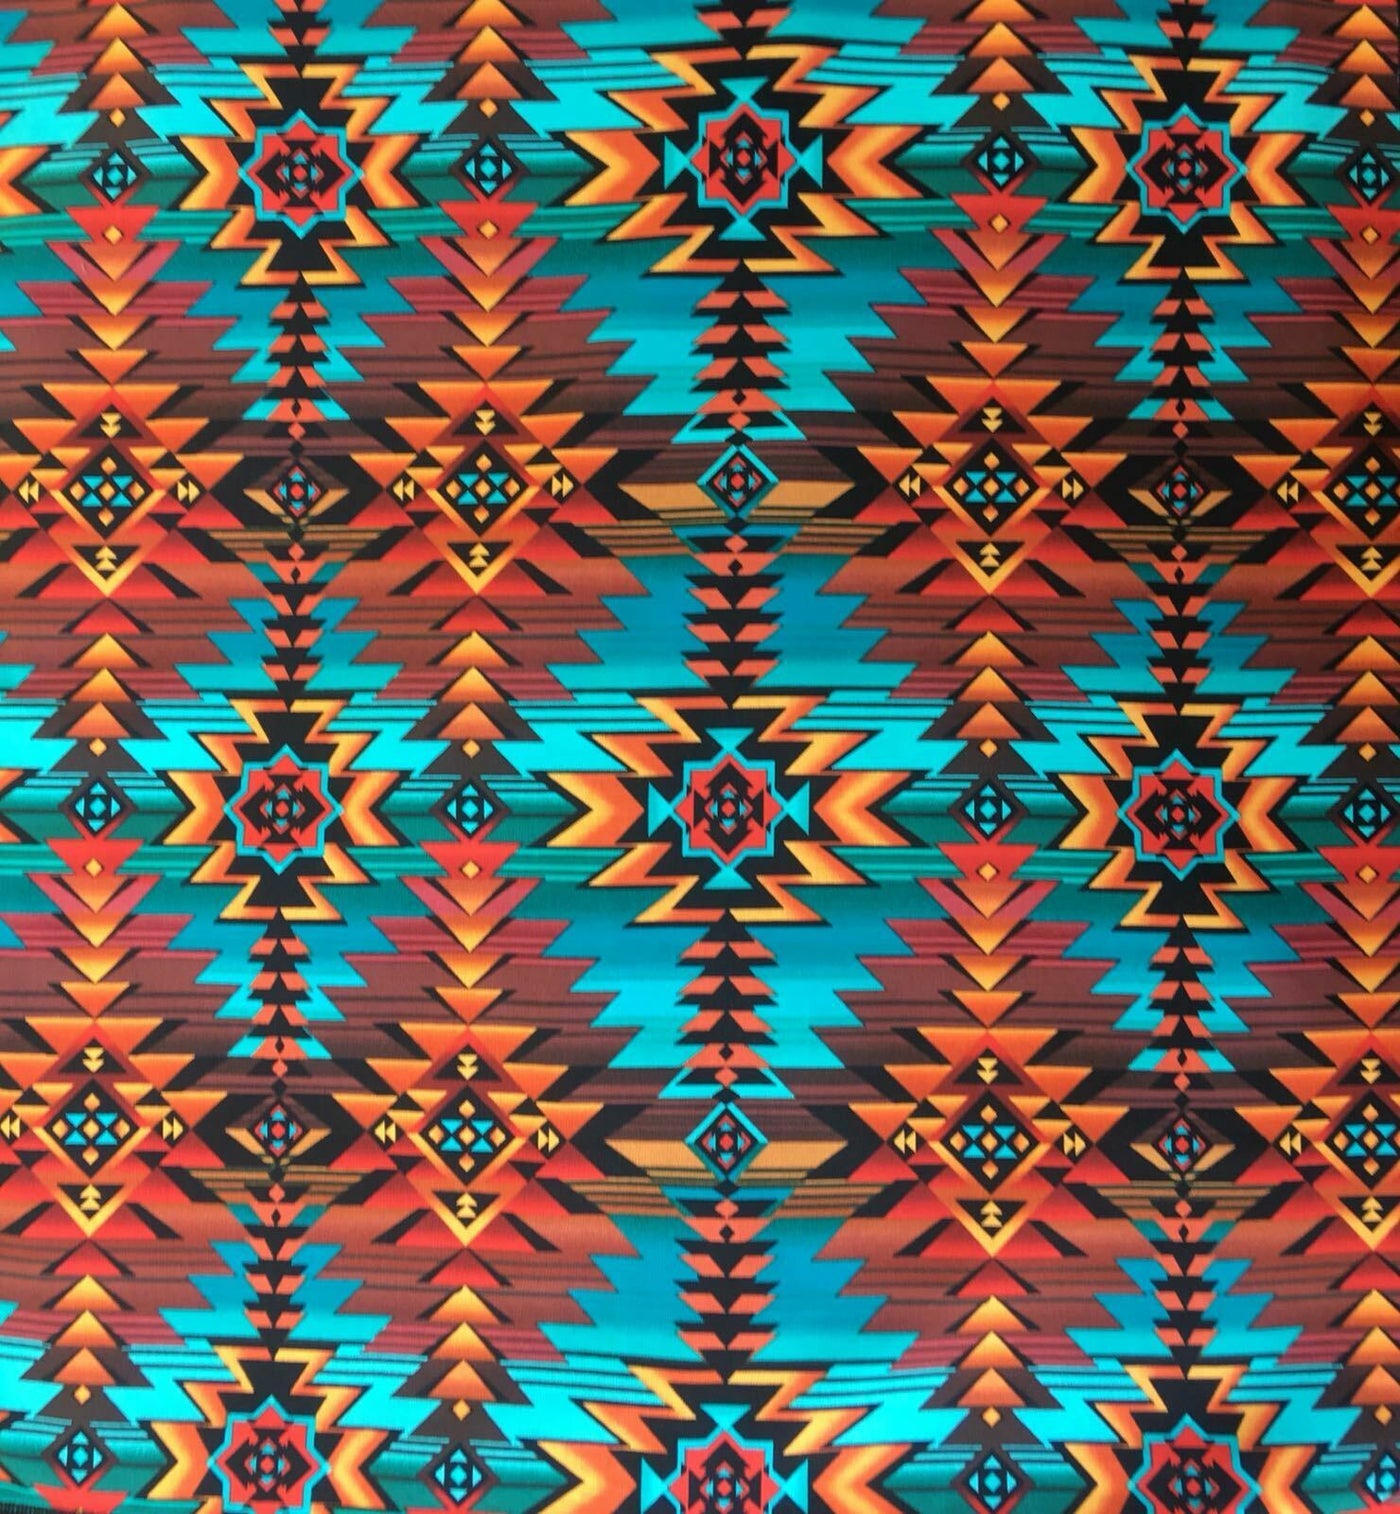 Navajo Aztec Influenced Designer Cushion Cover Case fits 18" x 18" 100% Cotton